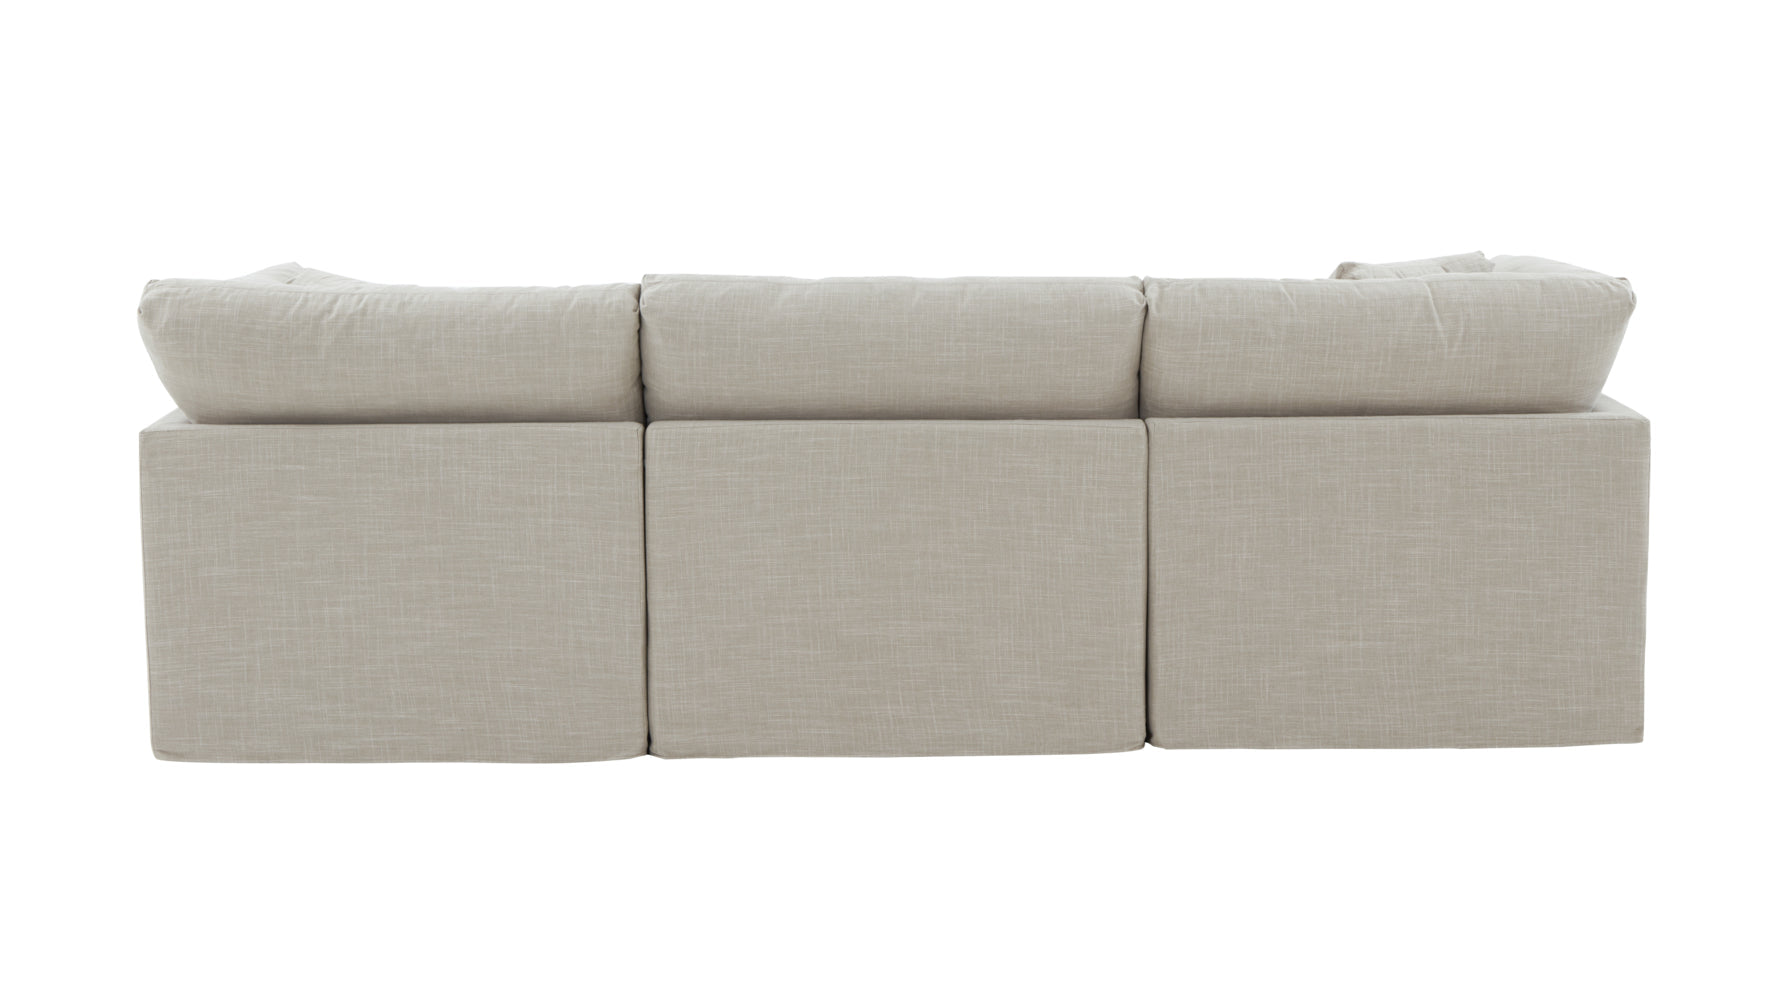 Get Together™ 3-Piece Modular Sofa, Standard, Light Pebble - Image 8